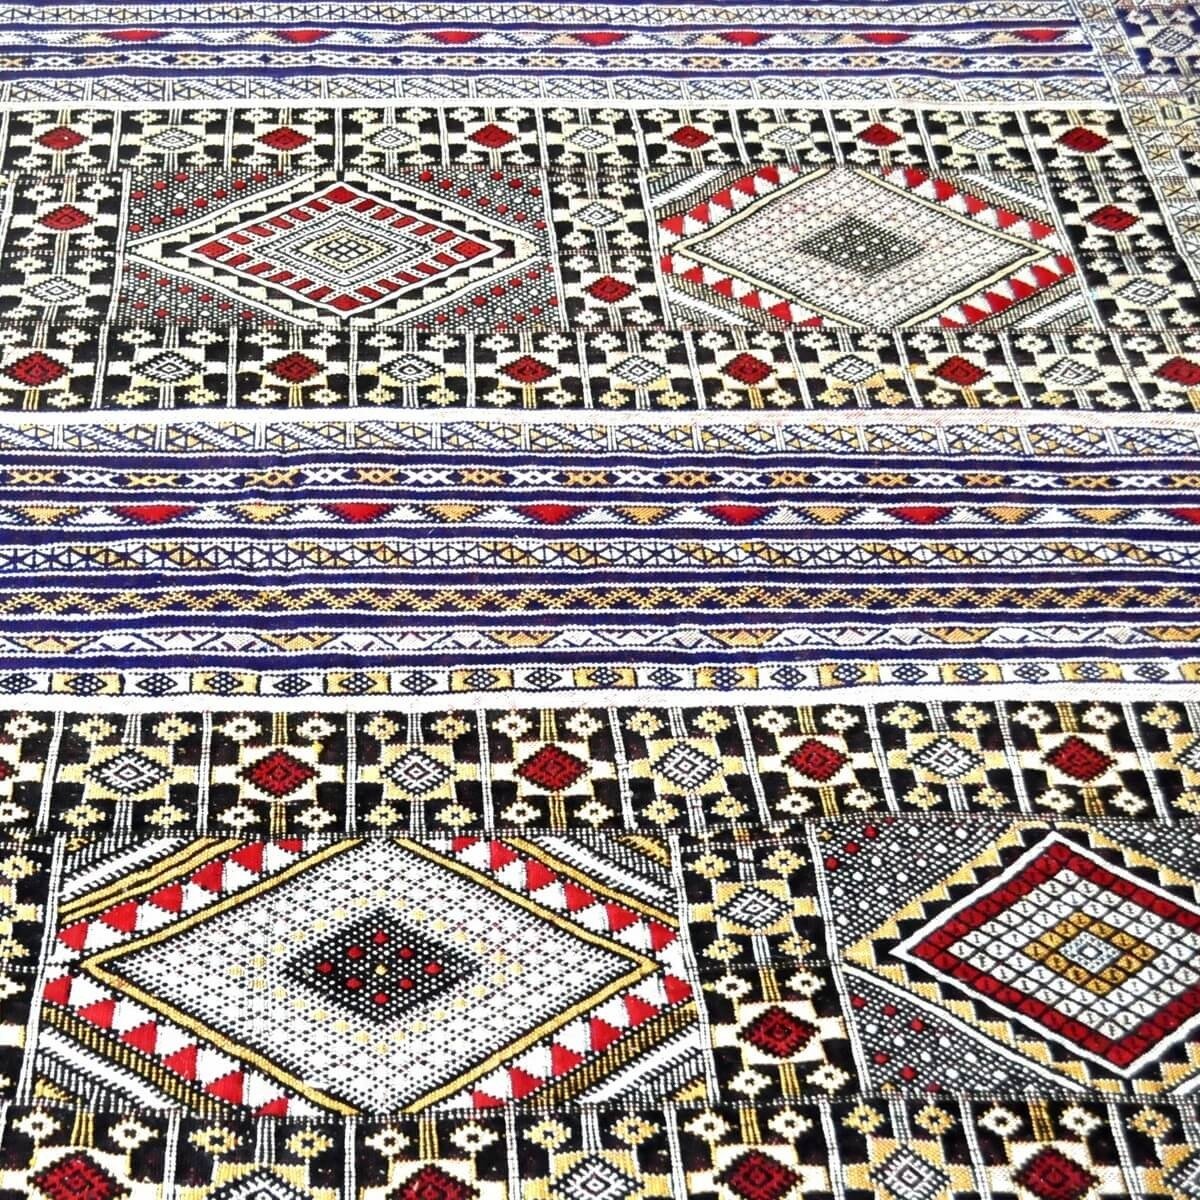 Tapis berbère Grand Tapis Hanbel Taza 170x235 Bleu/Rouge (Tissé main, Maroc)Grand Tapis hanbel marocain fait main en laine et so